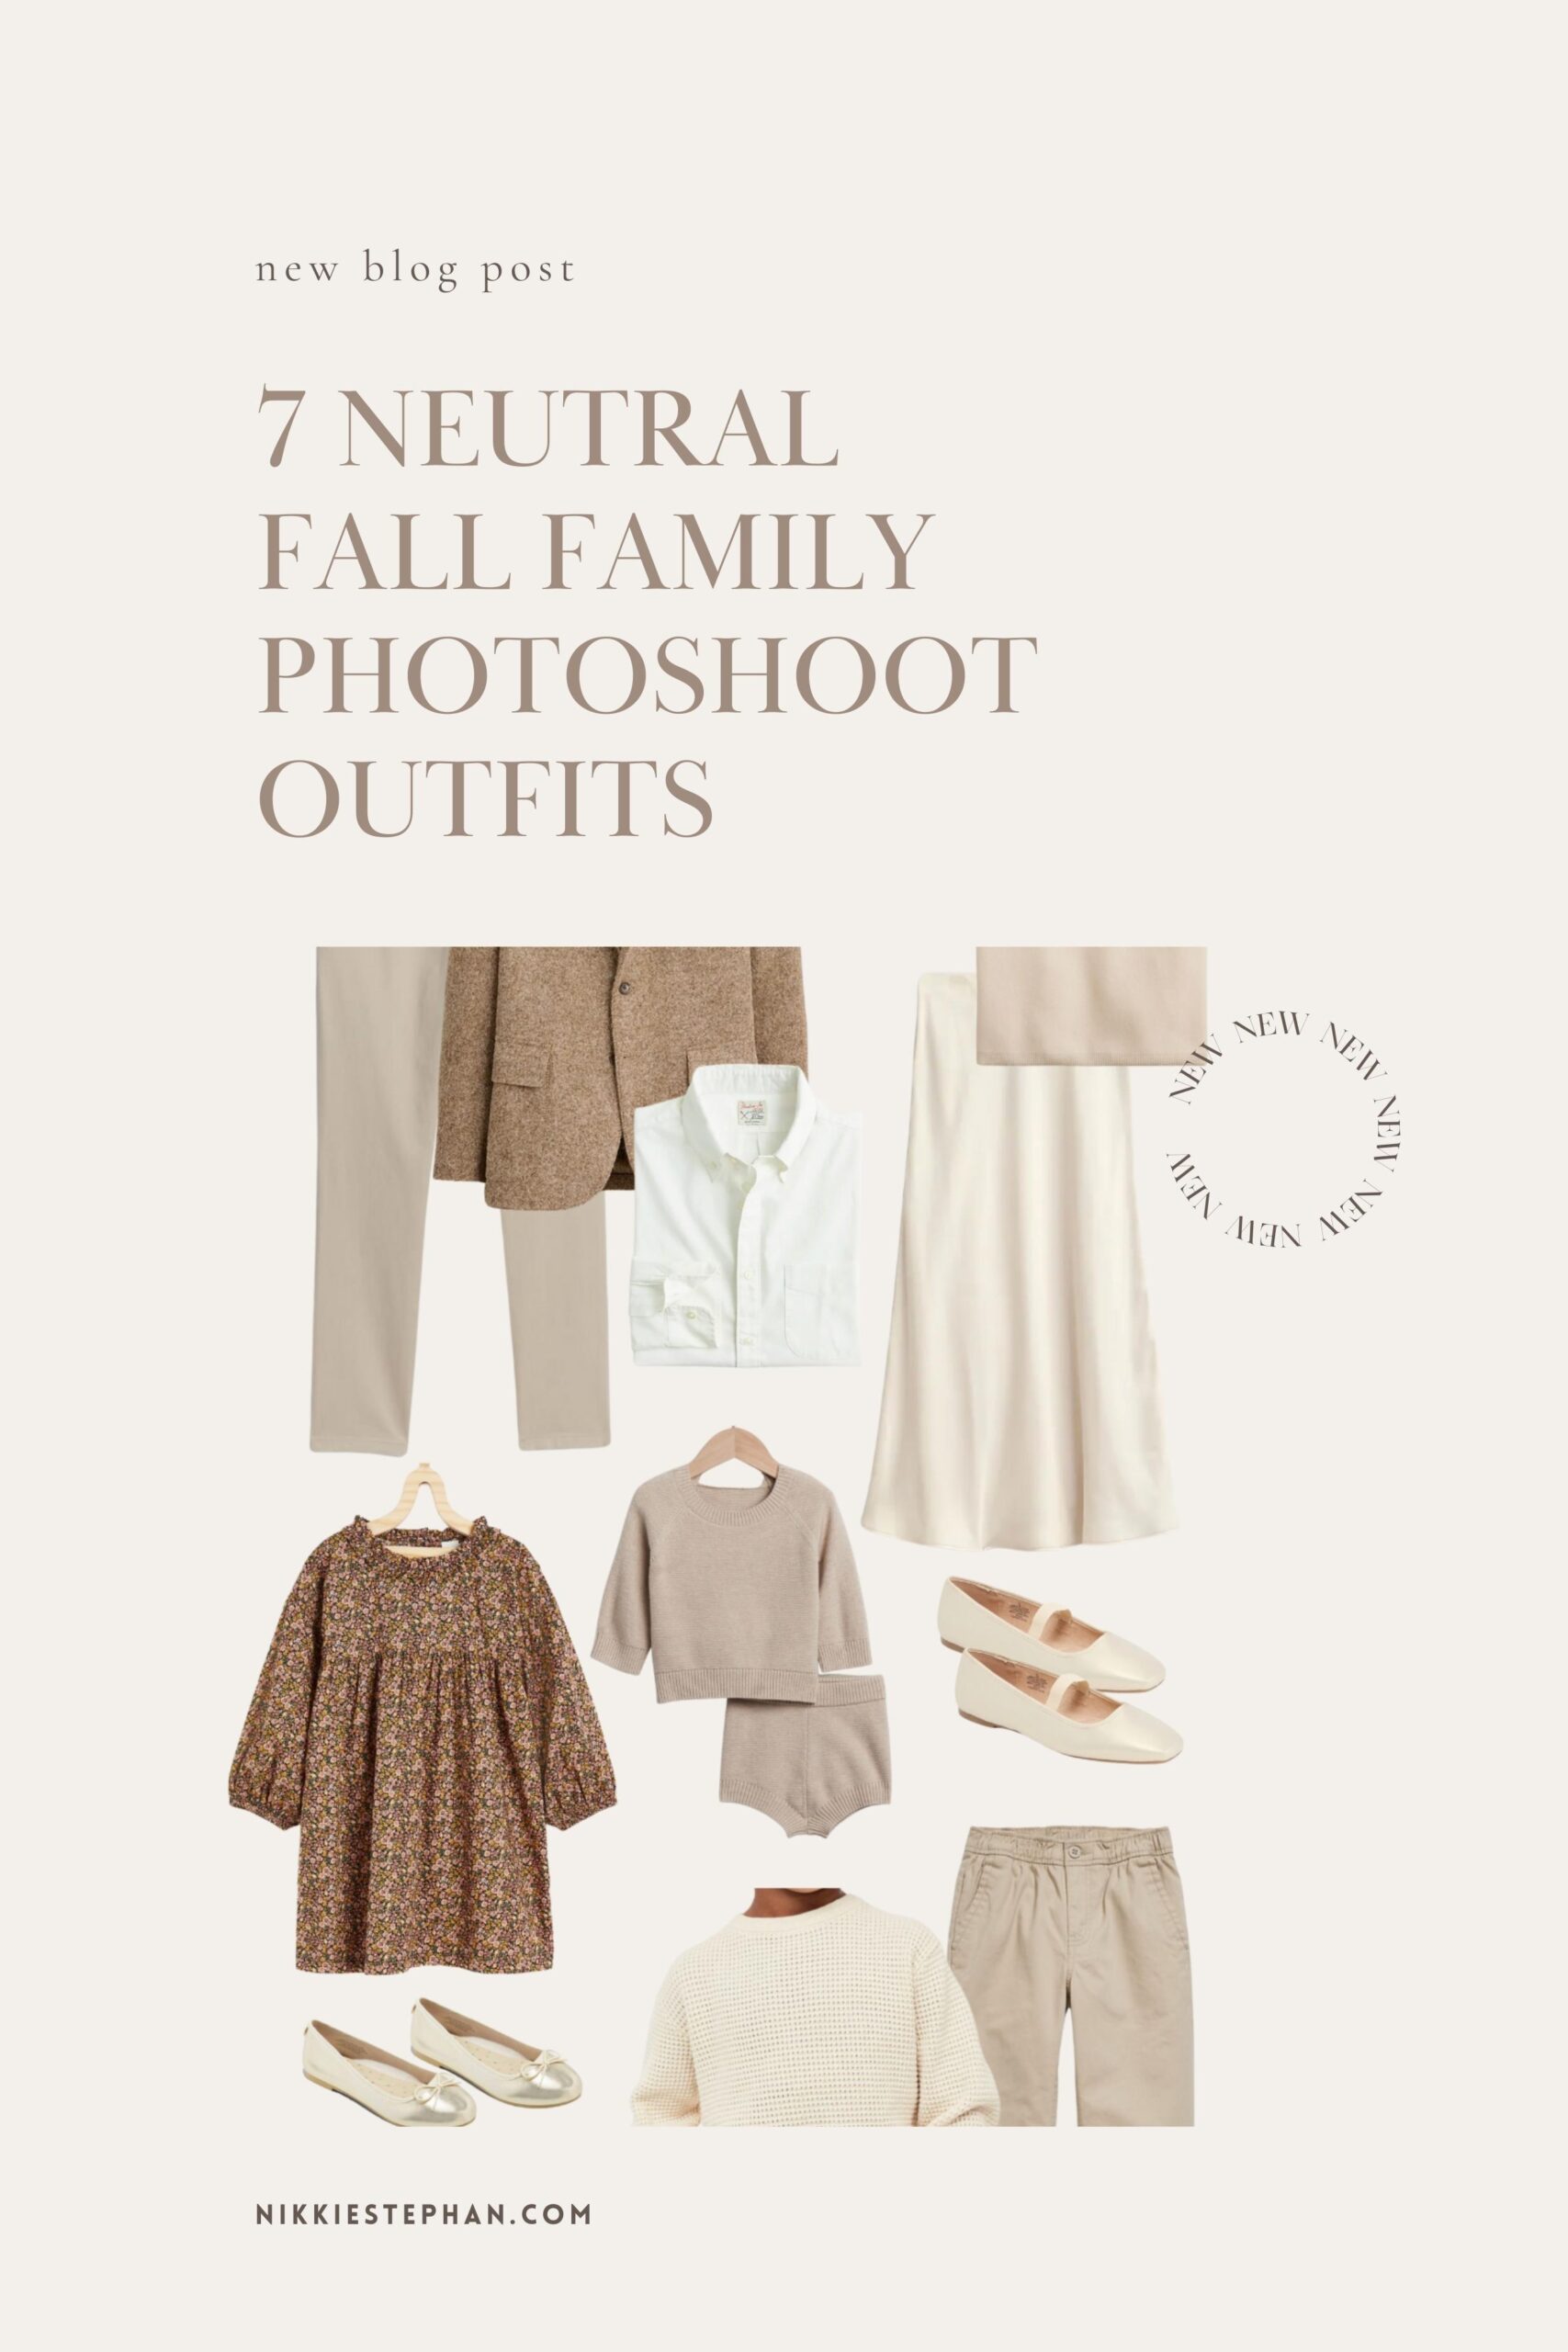 7 neutral fall family photoshoot outfits by nikki estephan